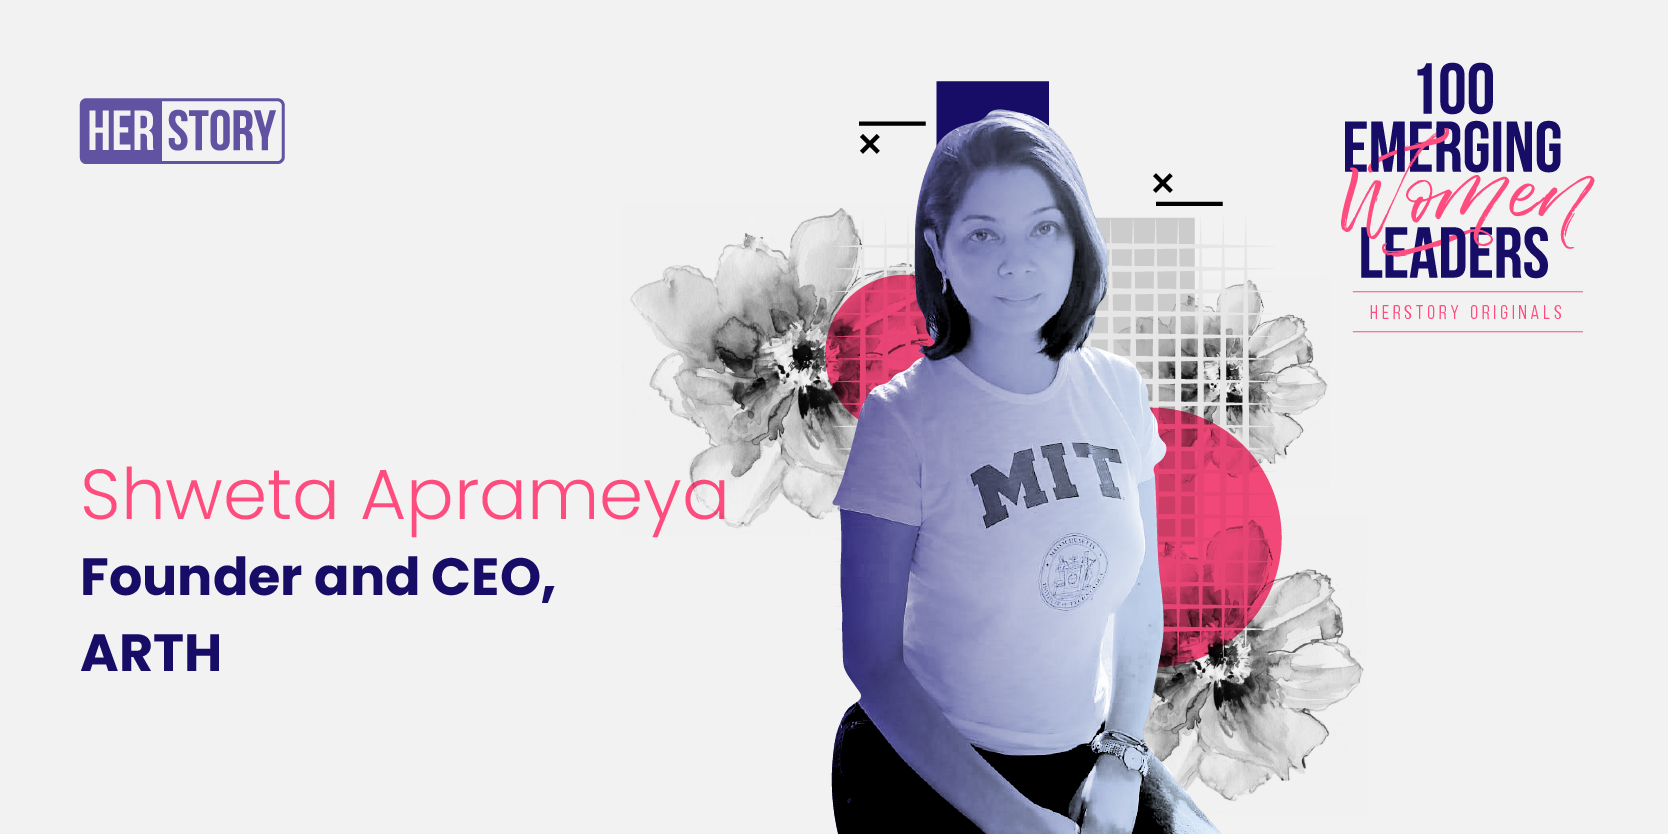 [100 Emerging Women Leaders] Meet Shweta Aprameya, who built fintech platforms way before they became the norm
